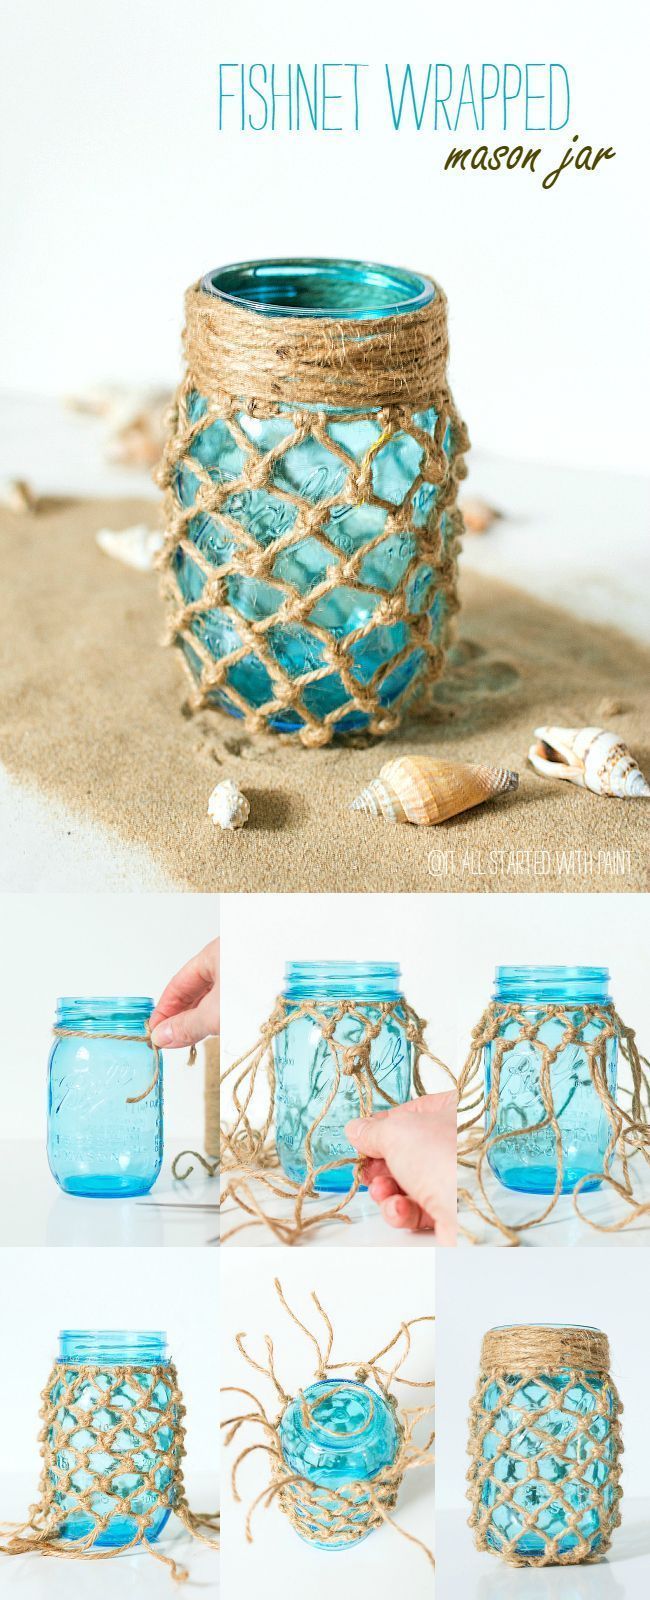 25+ Adorable DIY Mason Jar Crafts -   13 diy projects Tumblr facebook ideas